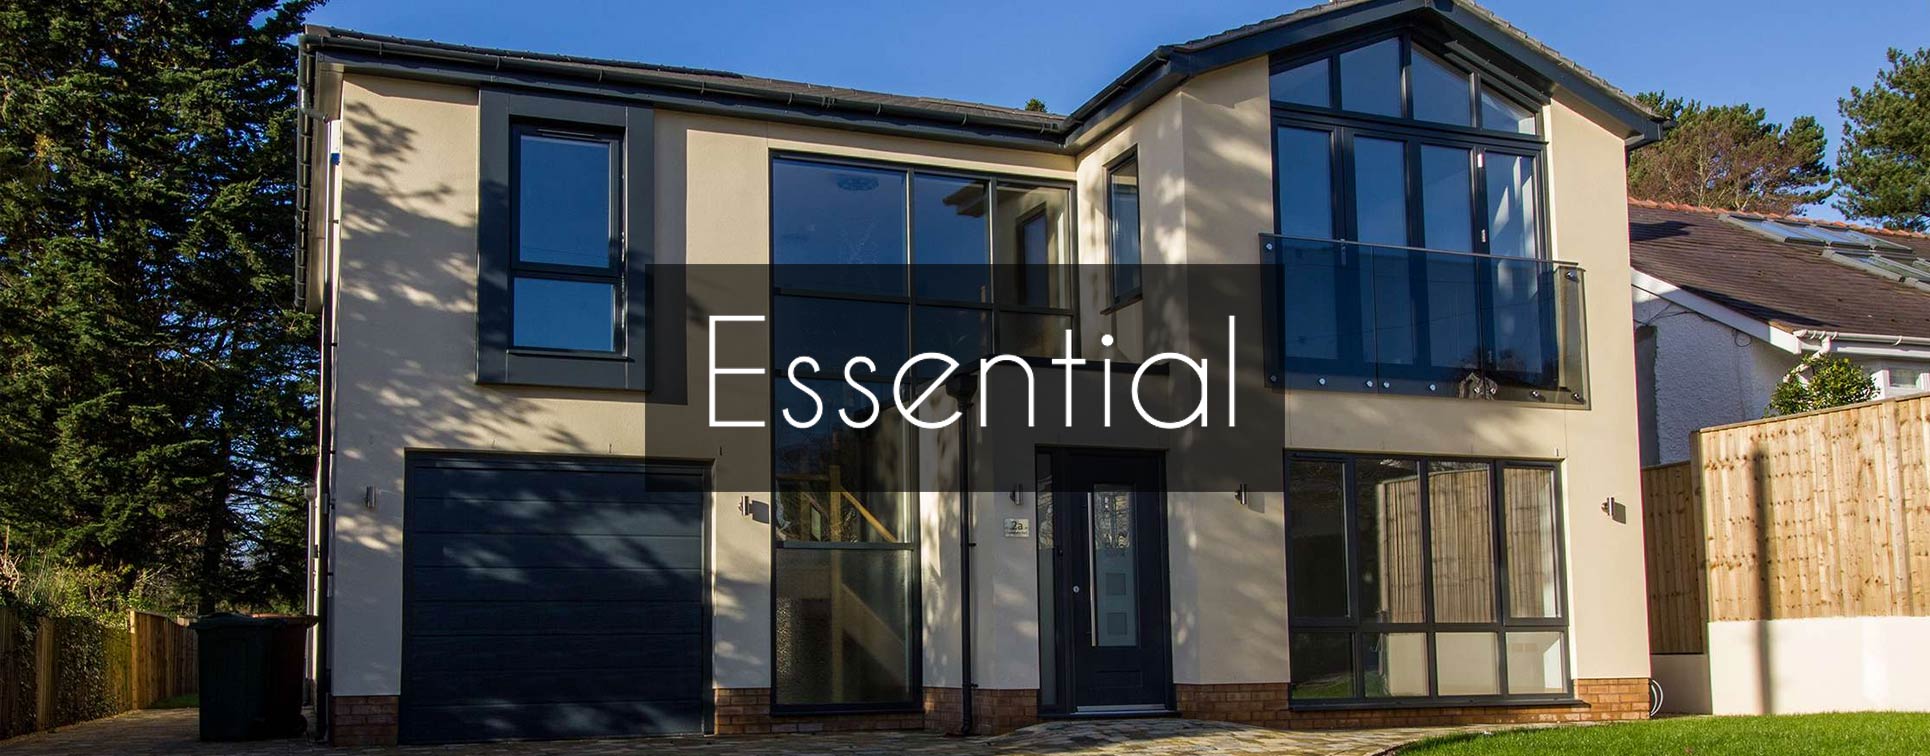 New build property featuring installation of Essential aluminium windows and bifold doors.